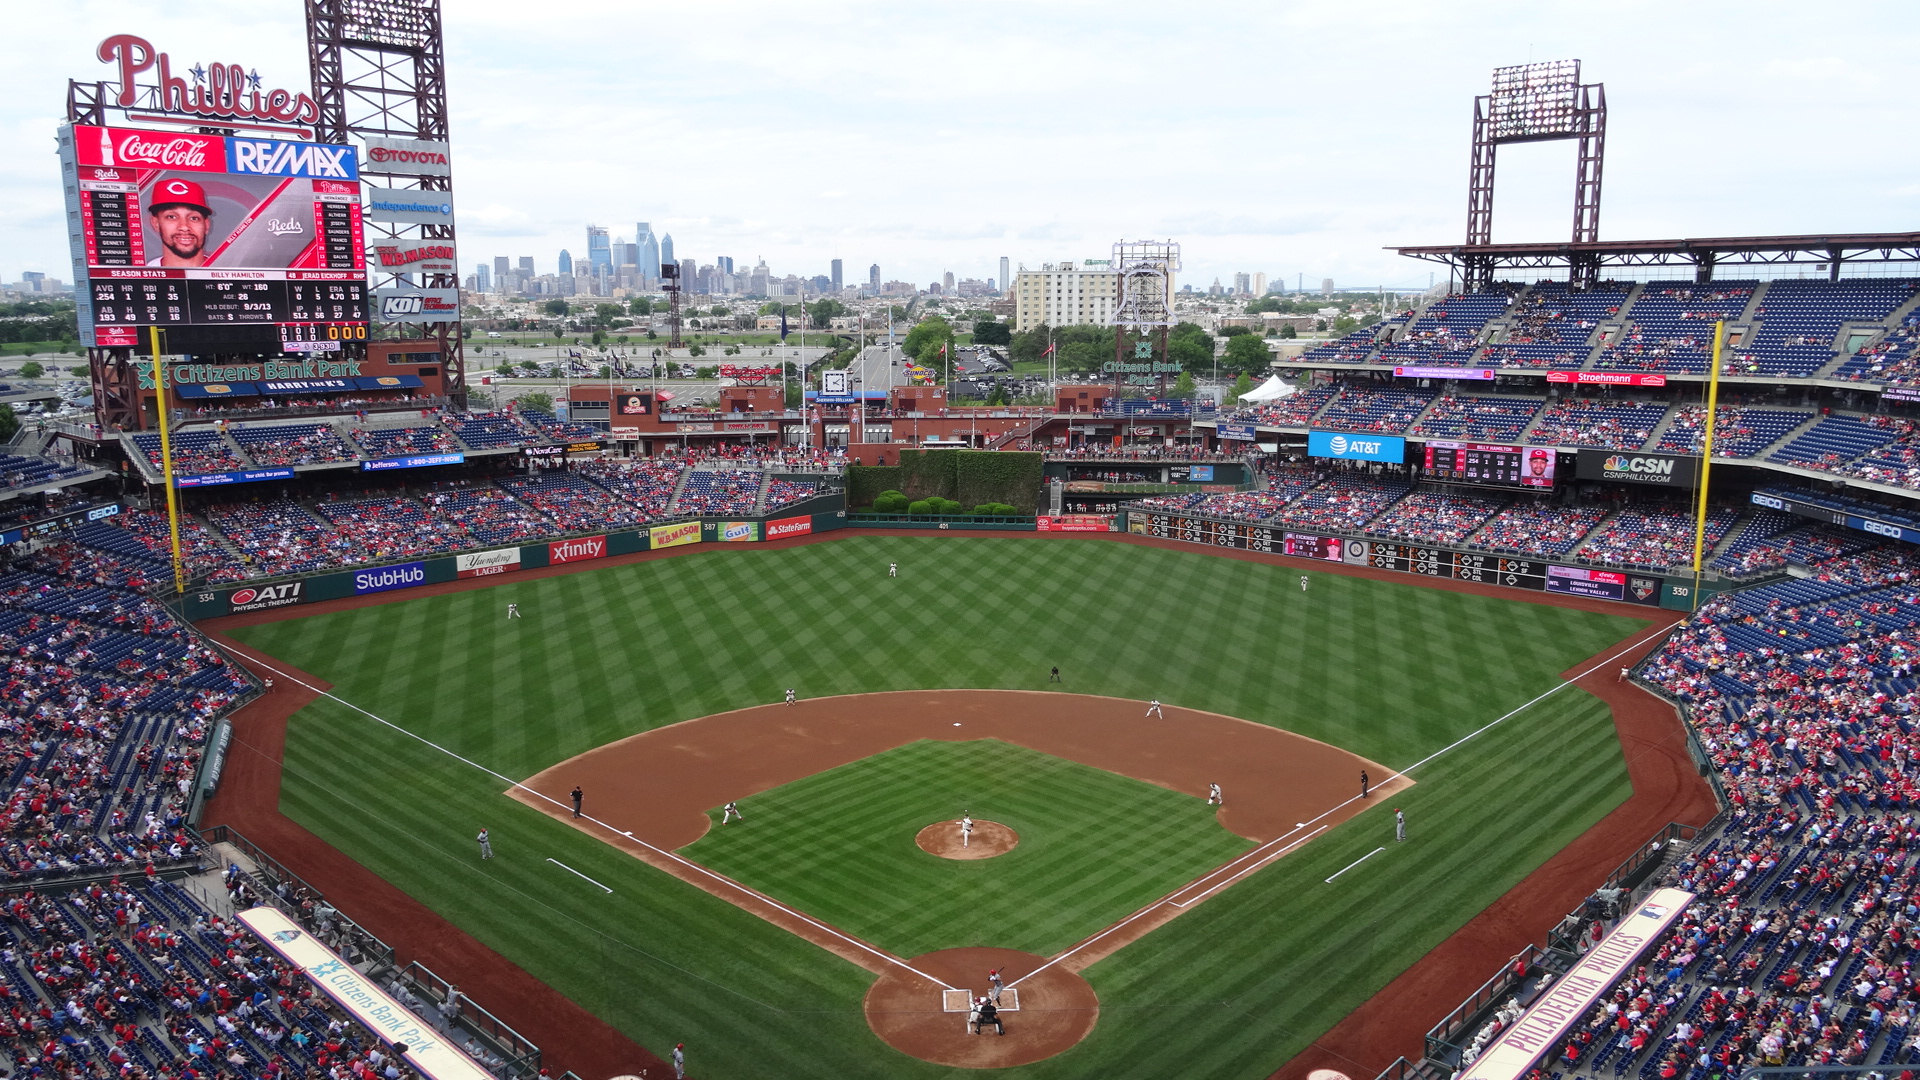 MLB Ballparks Await Their Turns at All-Star Games